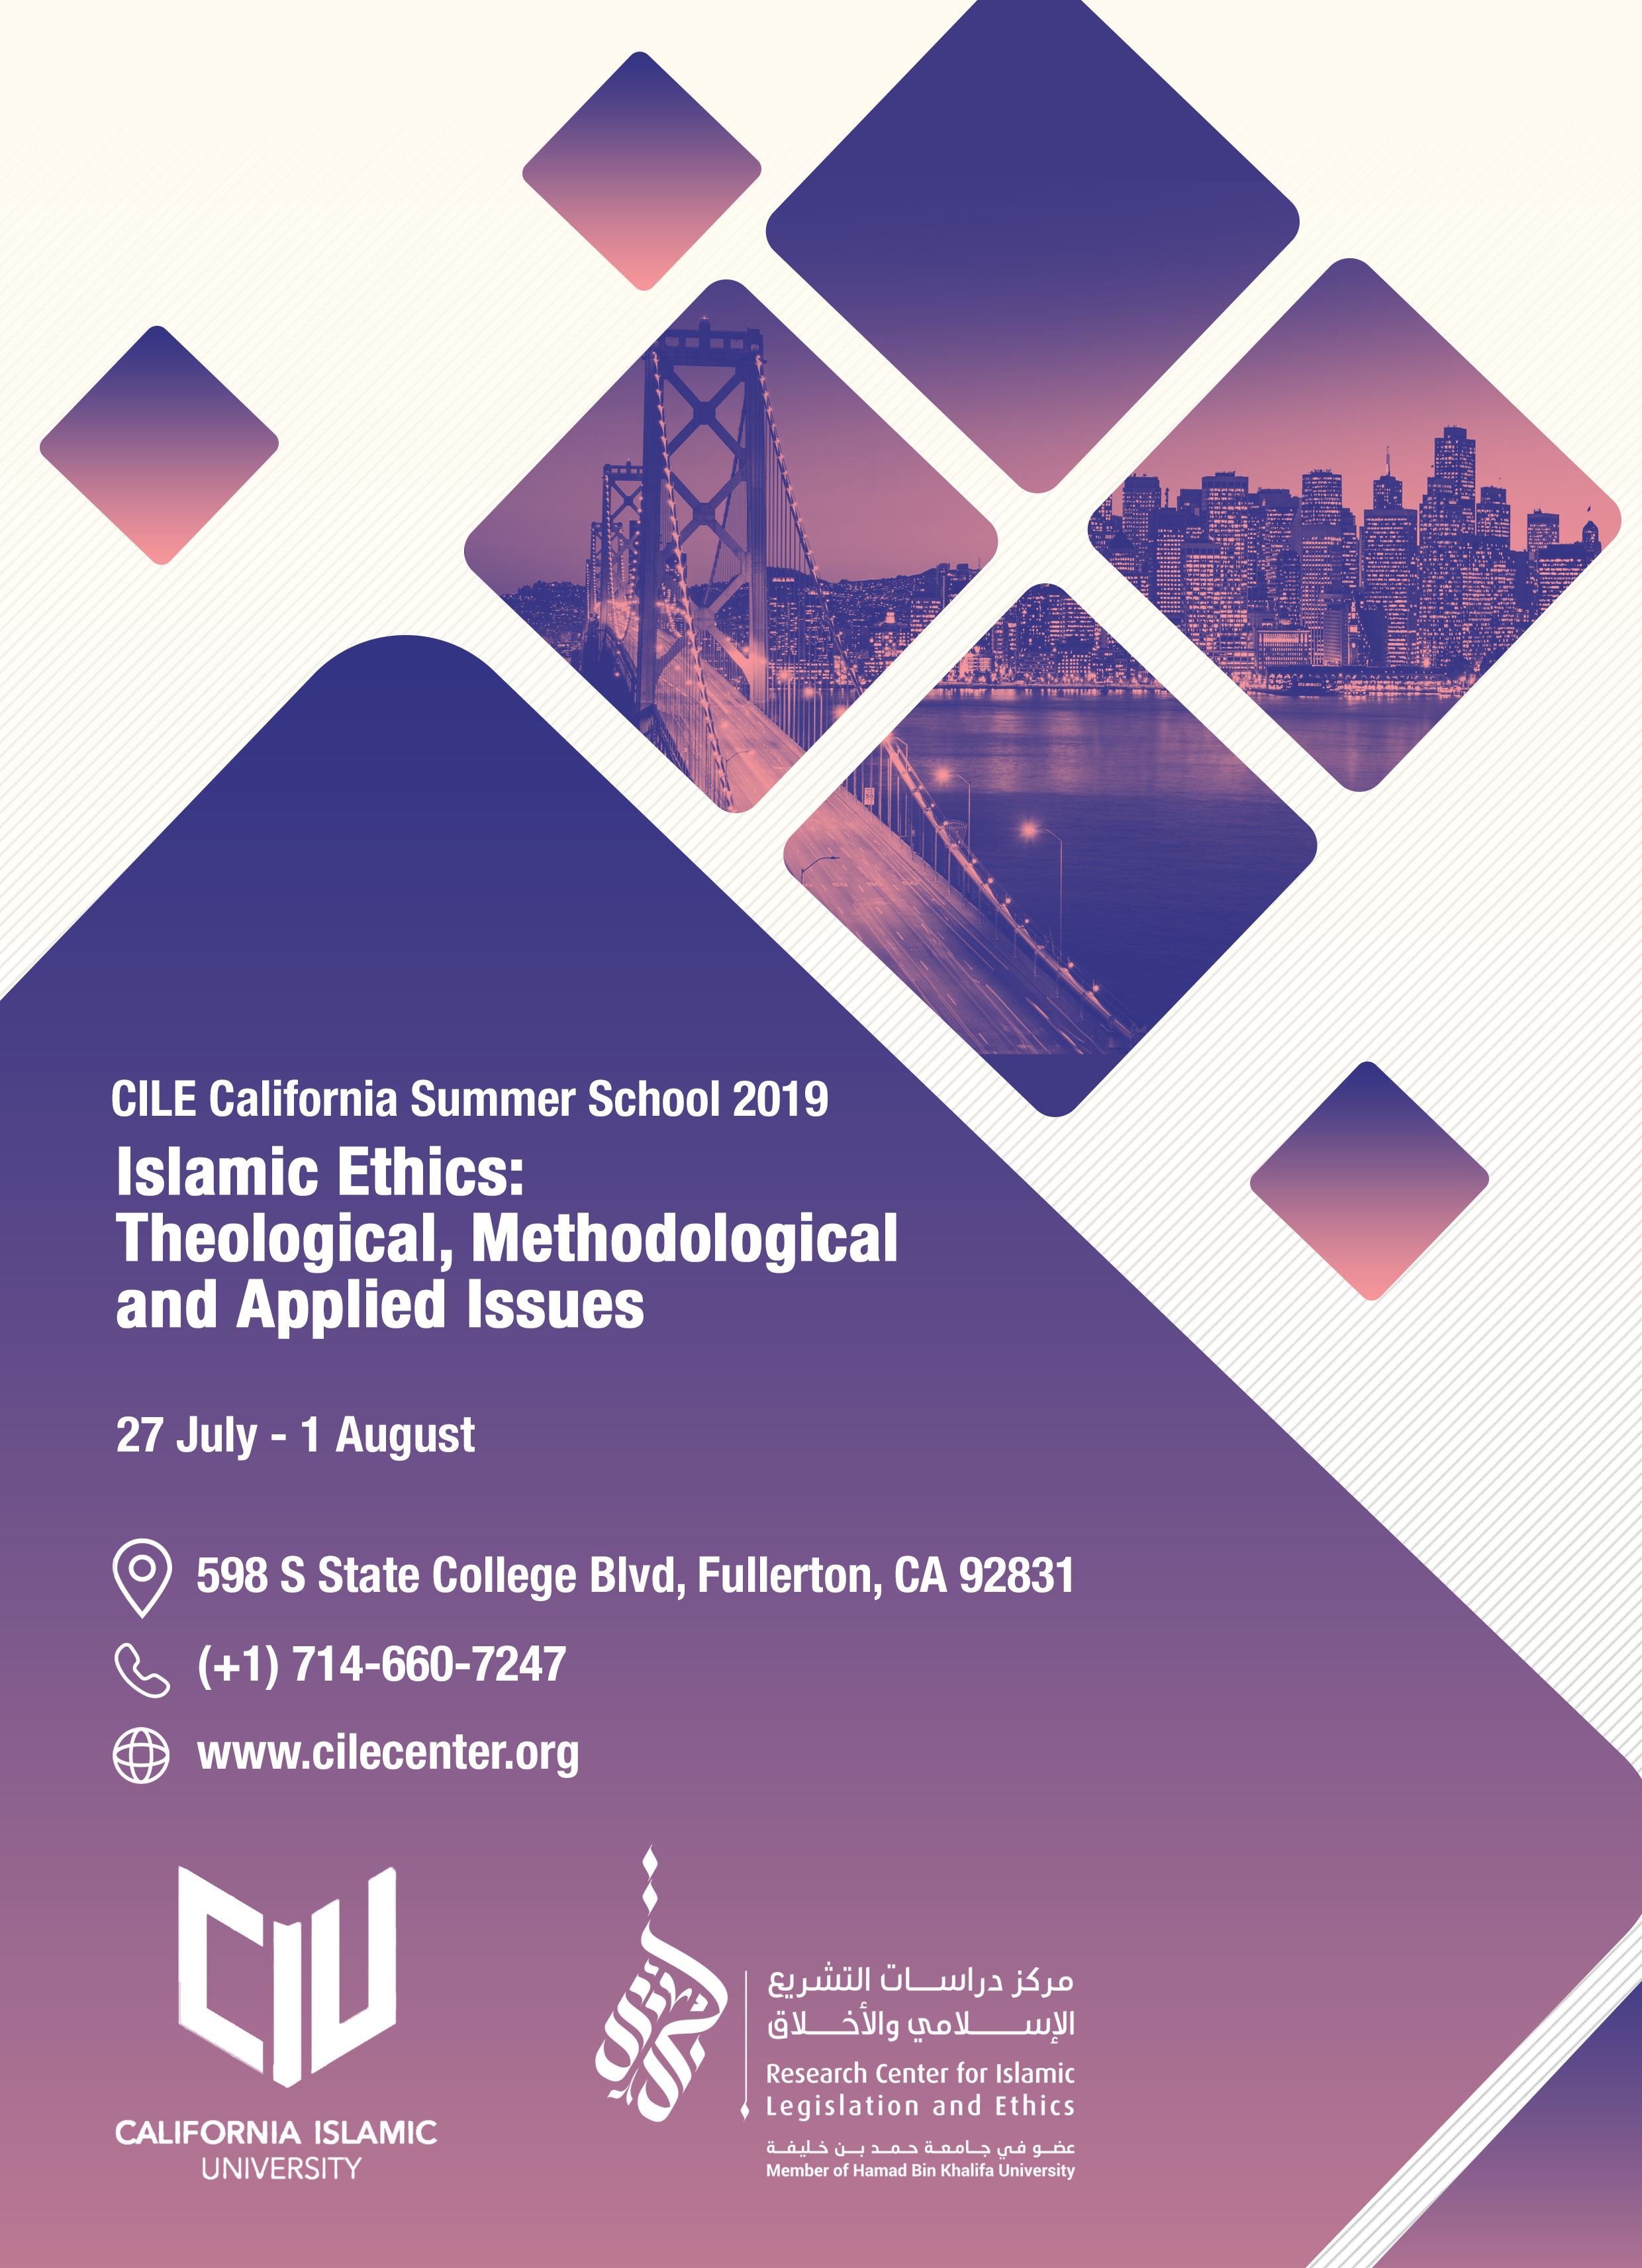 CILE California Summer School 2019